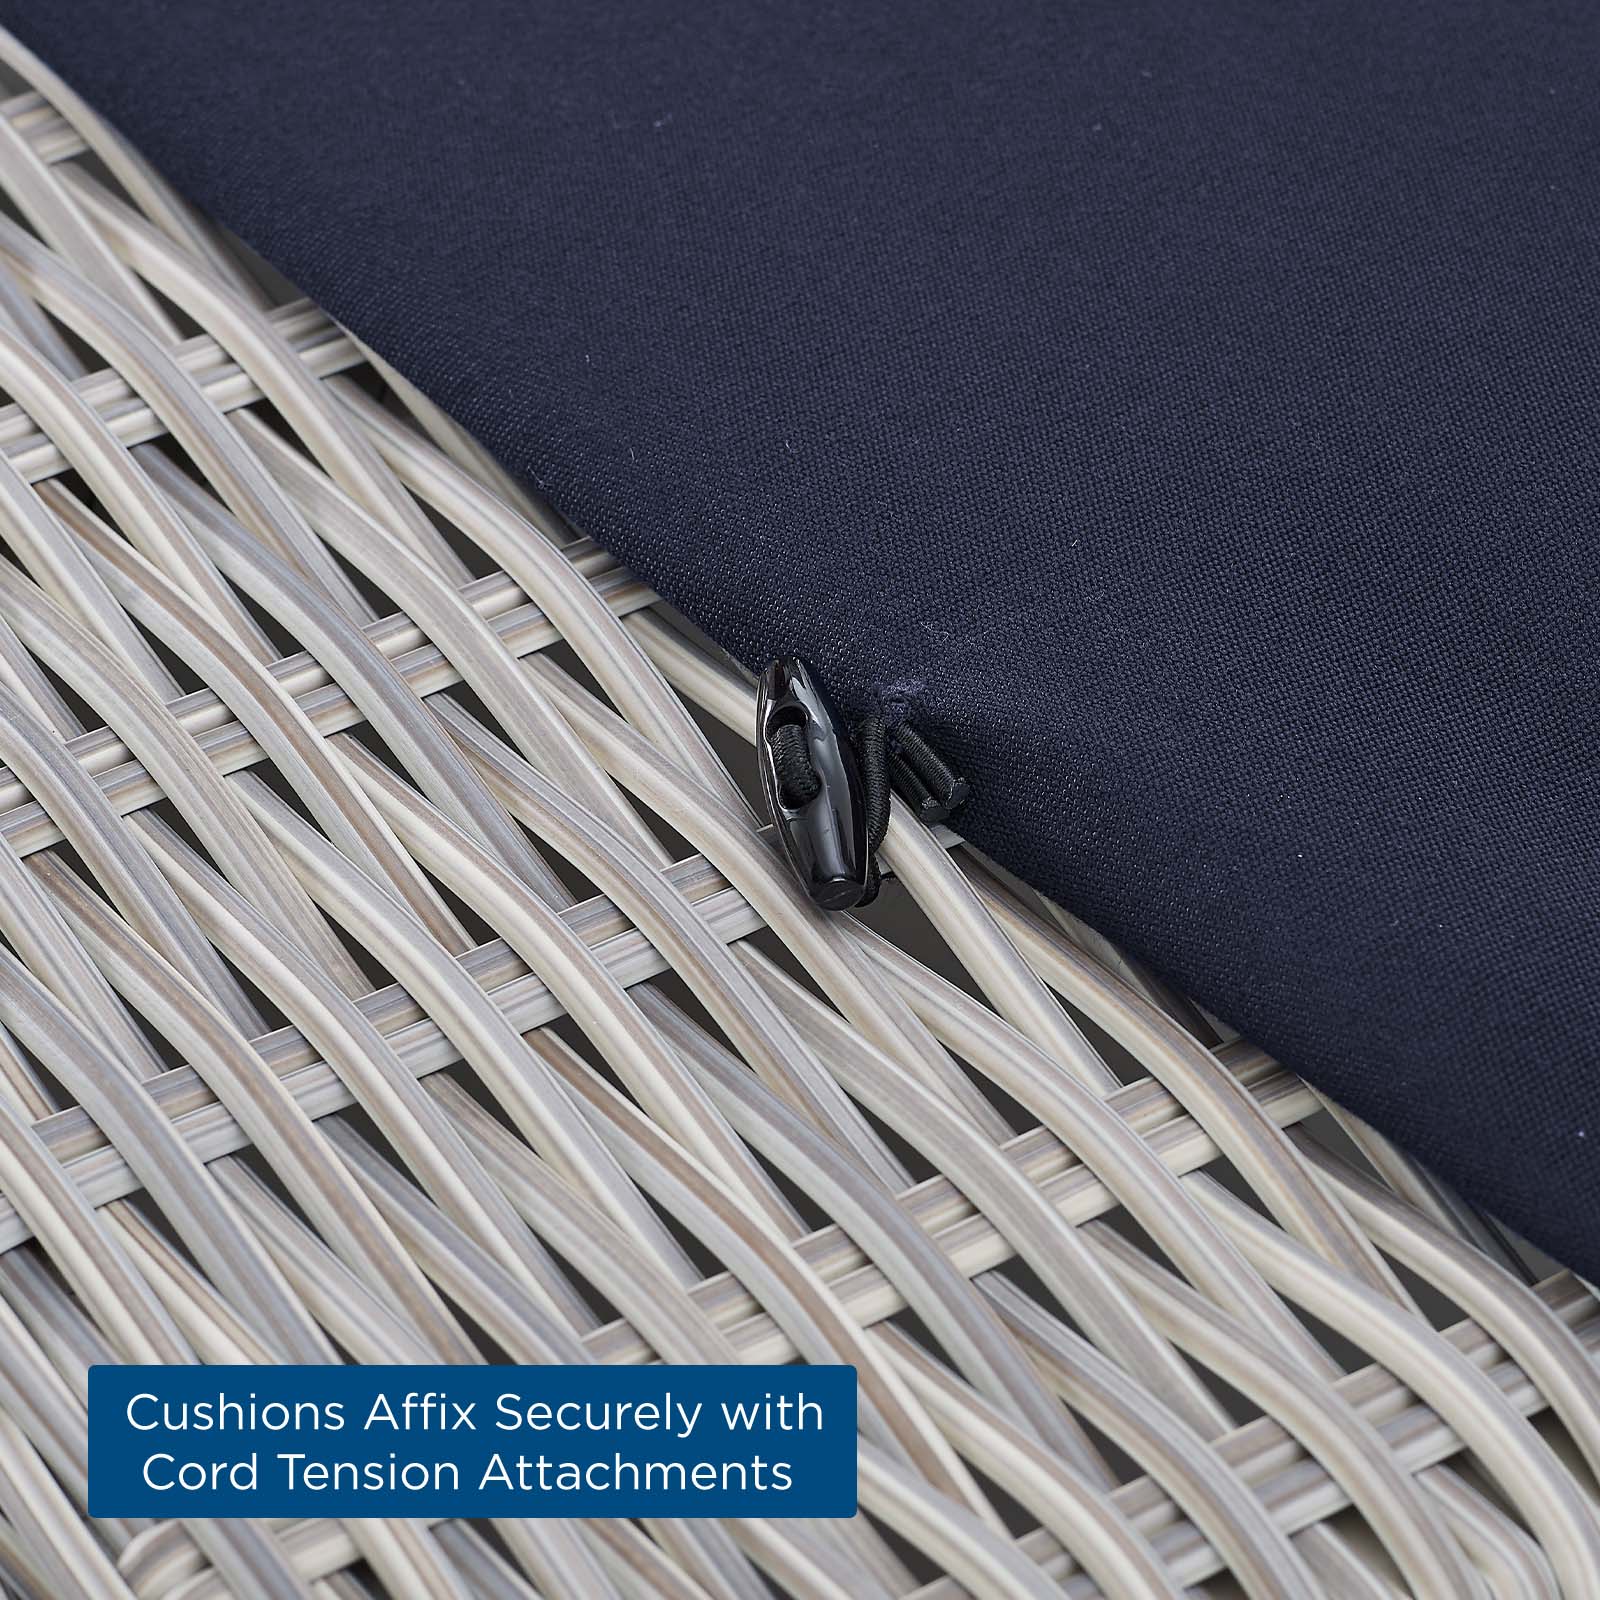 Conway Sunbrella® Outdoor Patio Wicker Rattan 4-Piece Furniture Set